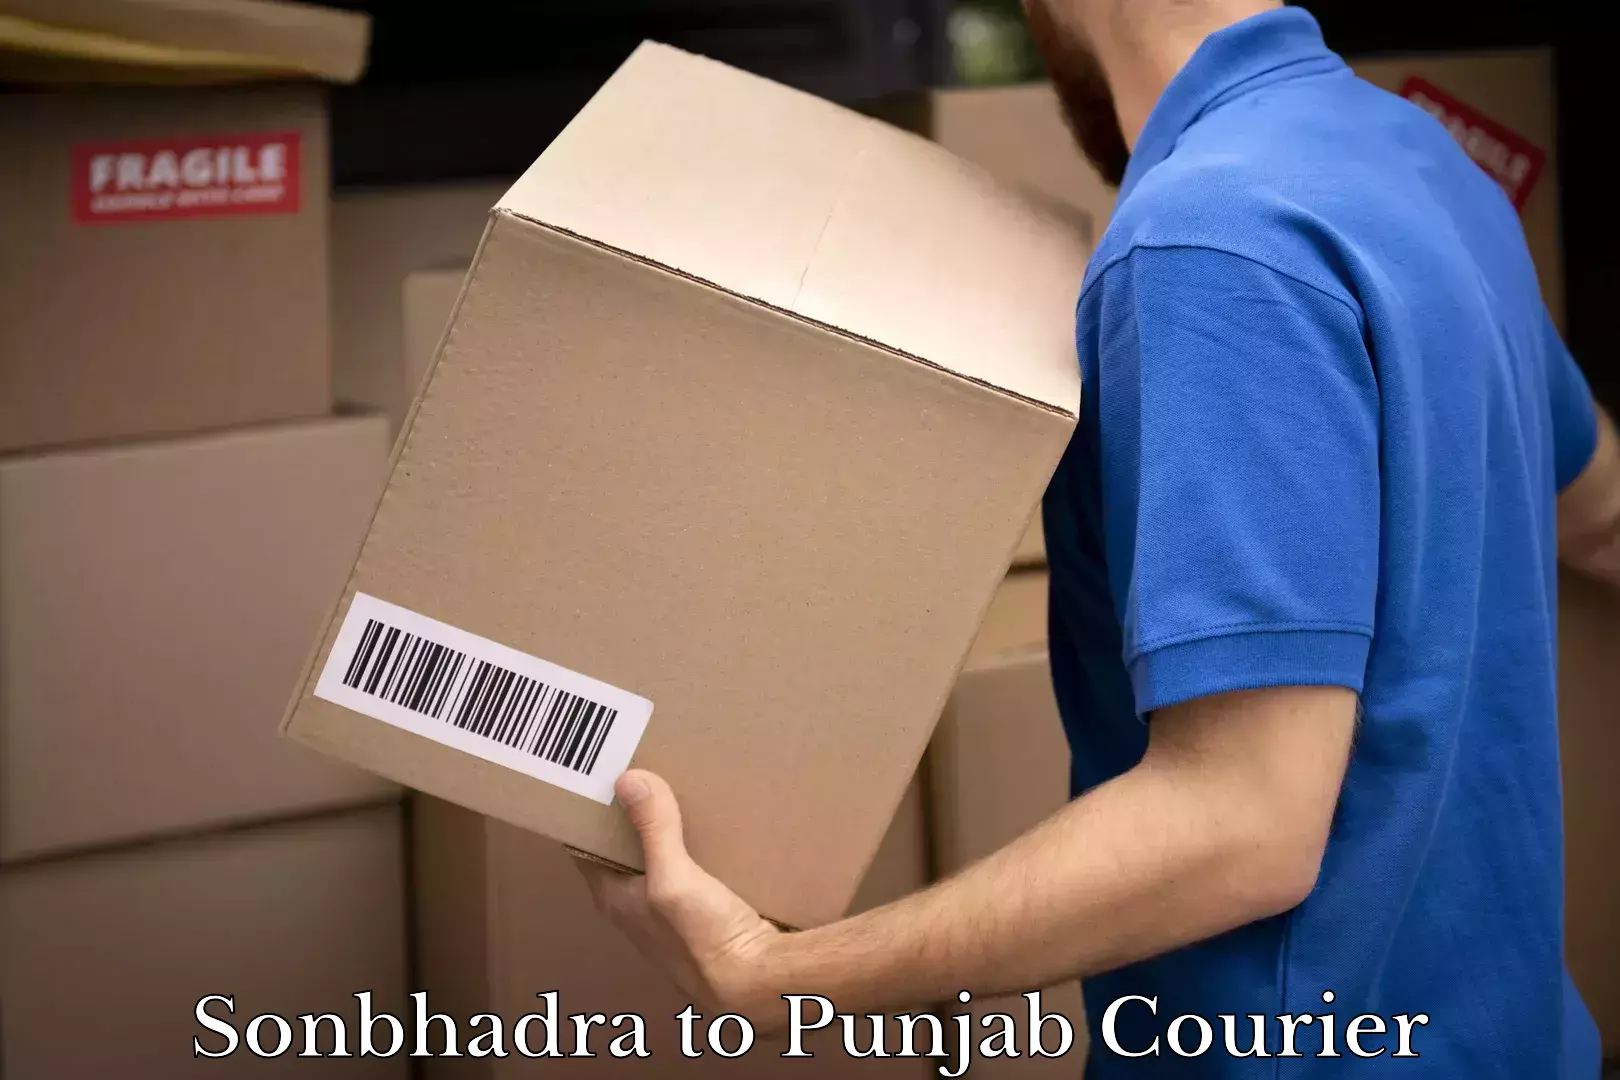 Smart shipping technology Sonbhadra to Punjab